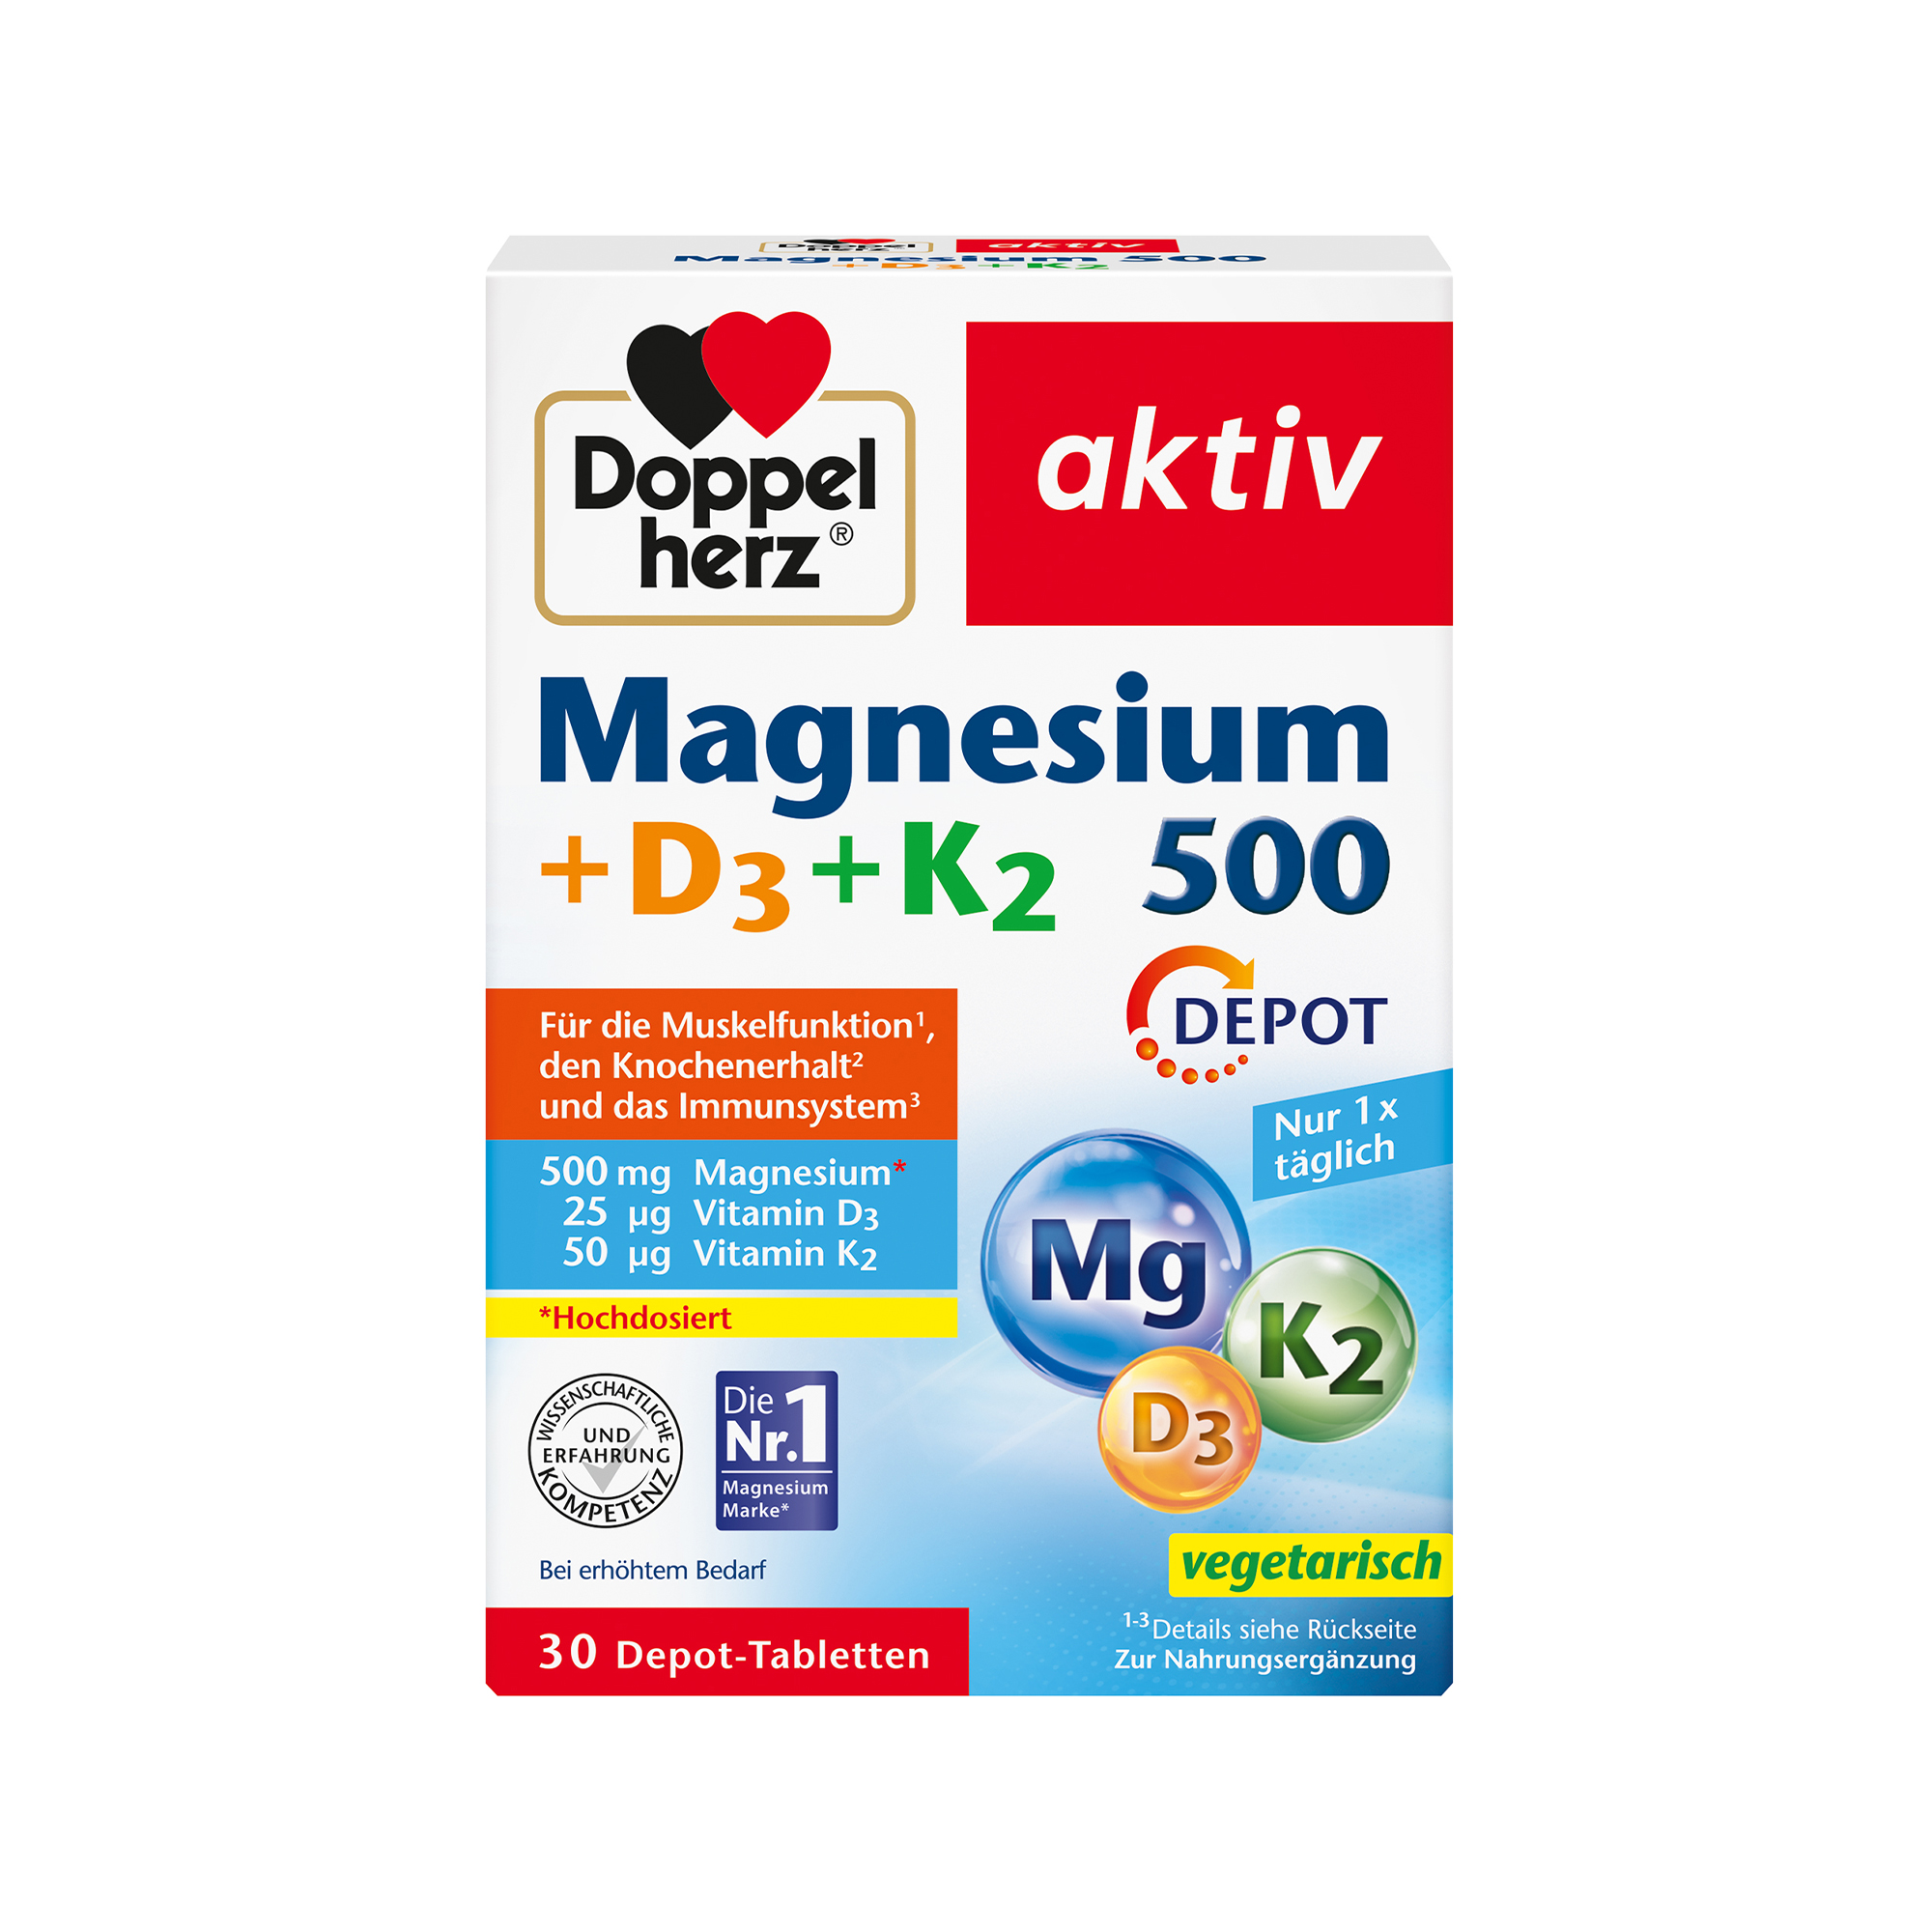 Doppelherz aktiv Magnesium 500 + D3 + K2 Depot, 30 Tabletten